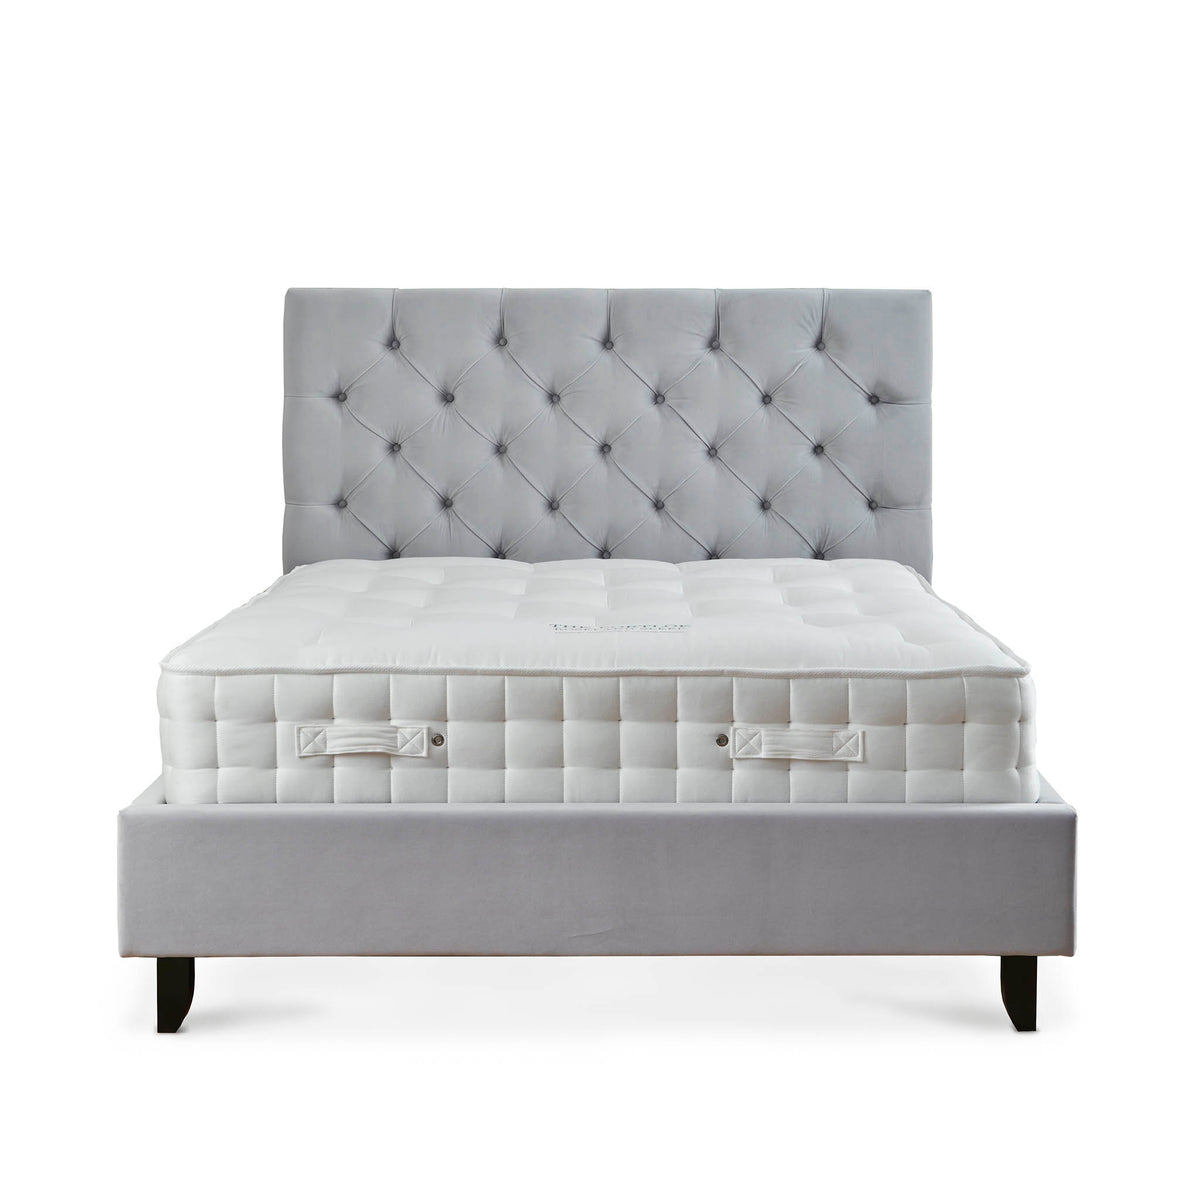 Finley Silver Mink Velvet Upholstered Bed Frame front view 